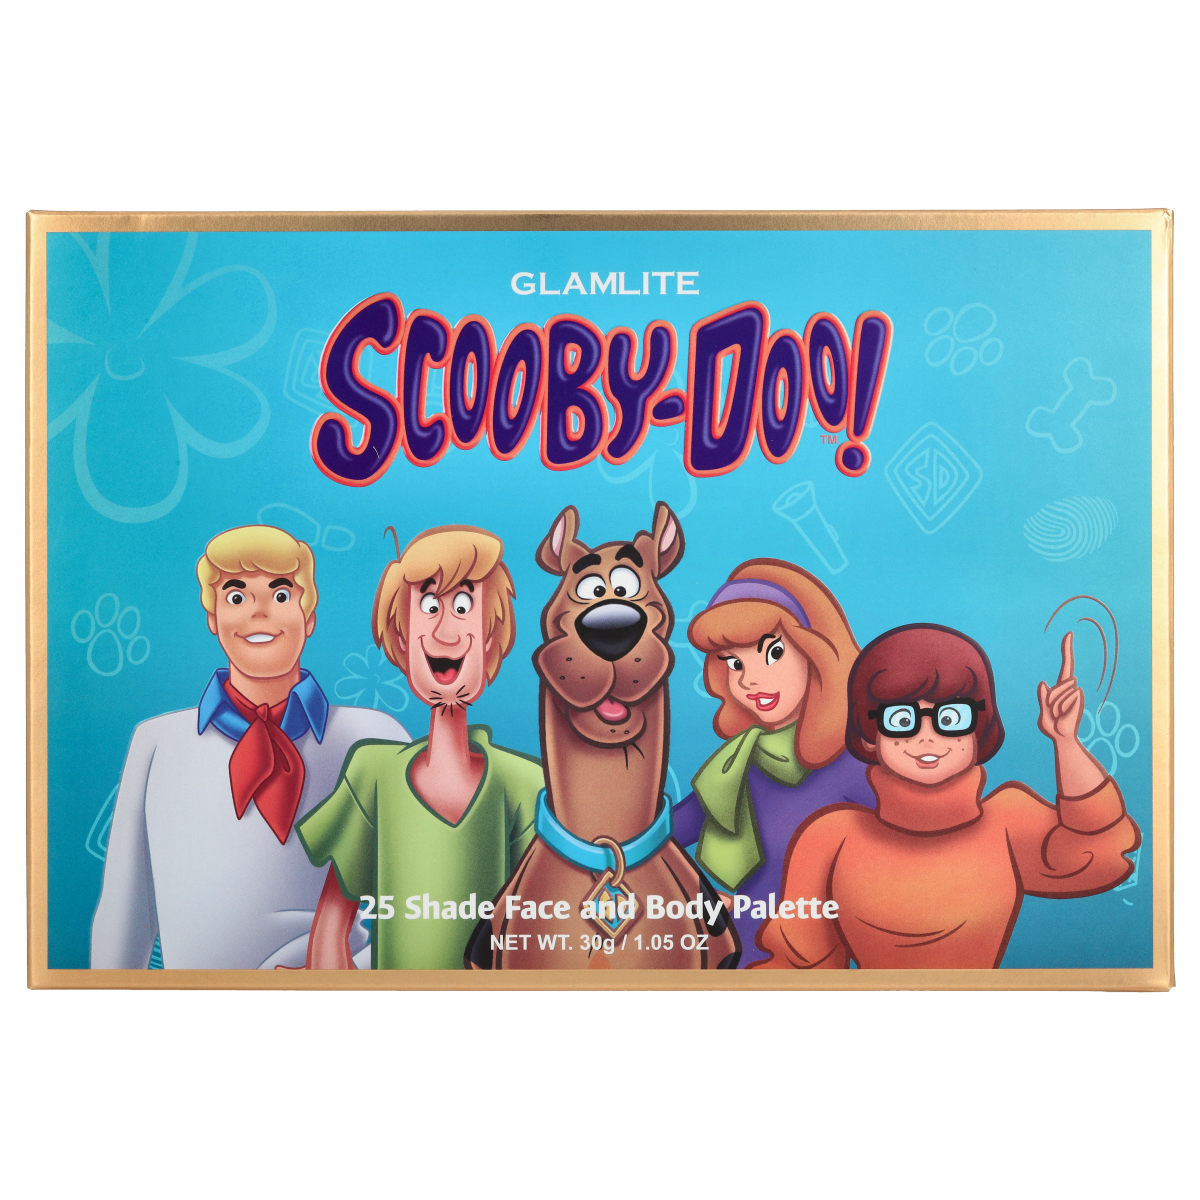 Scooby-Doo x Glamlite 25 Color Palette